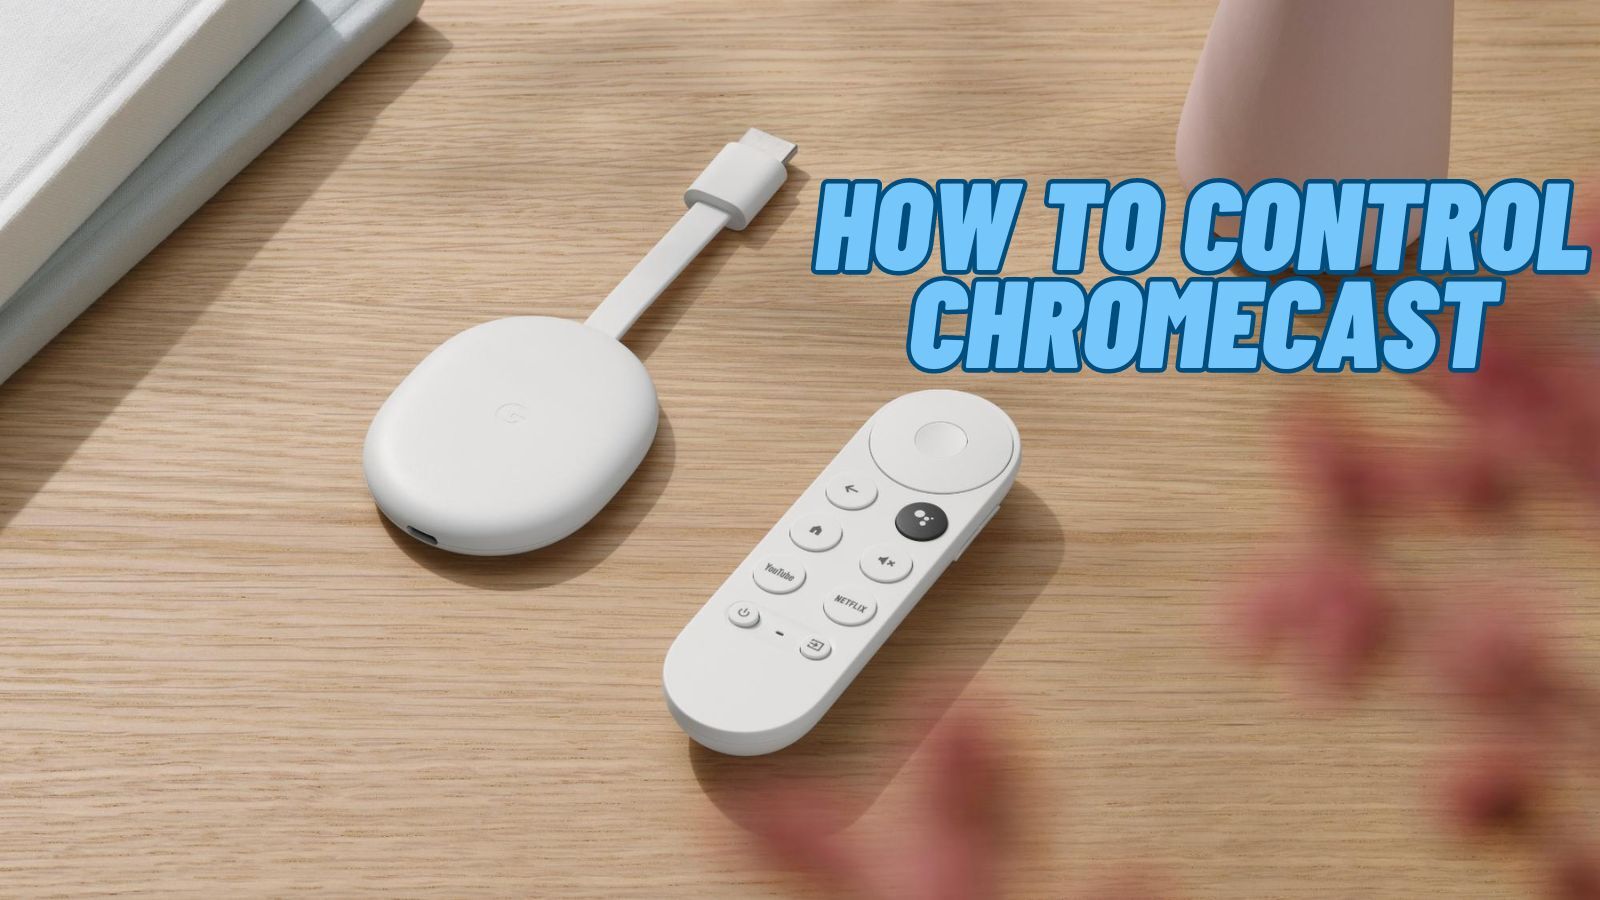 How to Control Chromecast? (Step-by-Step Guide)